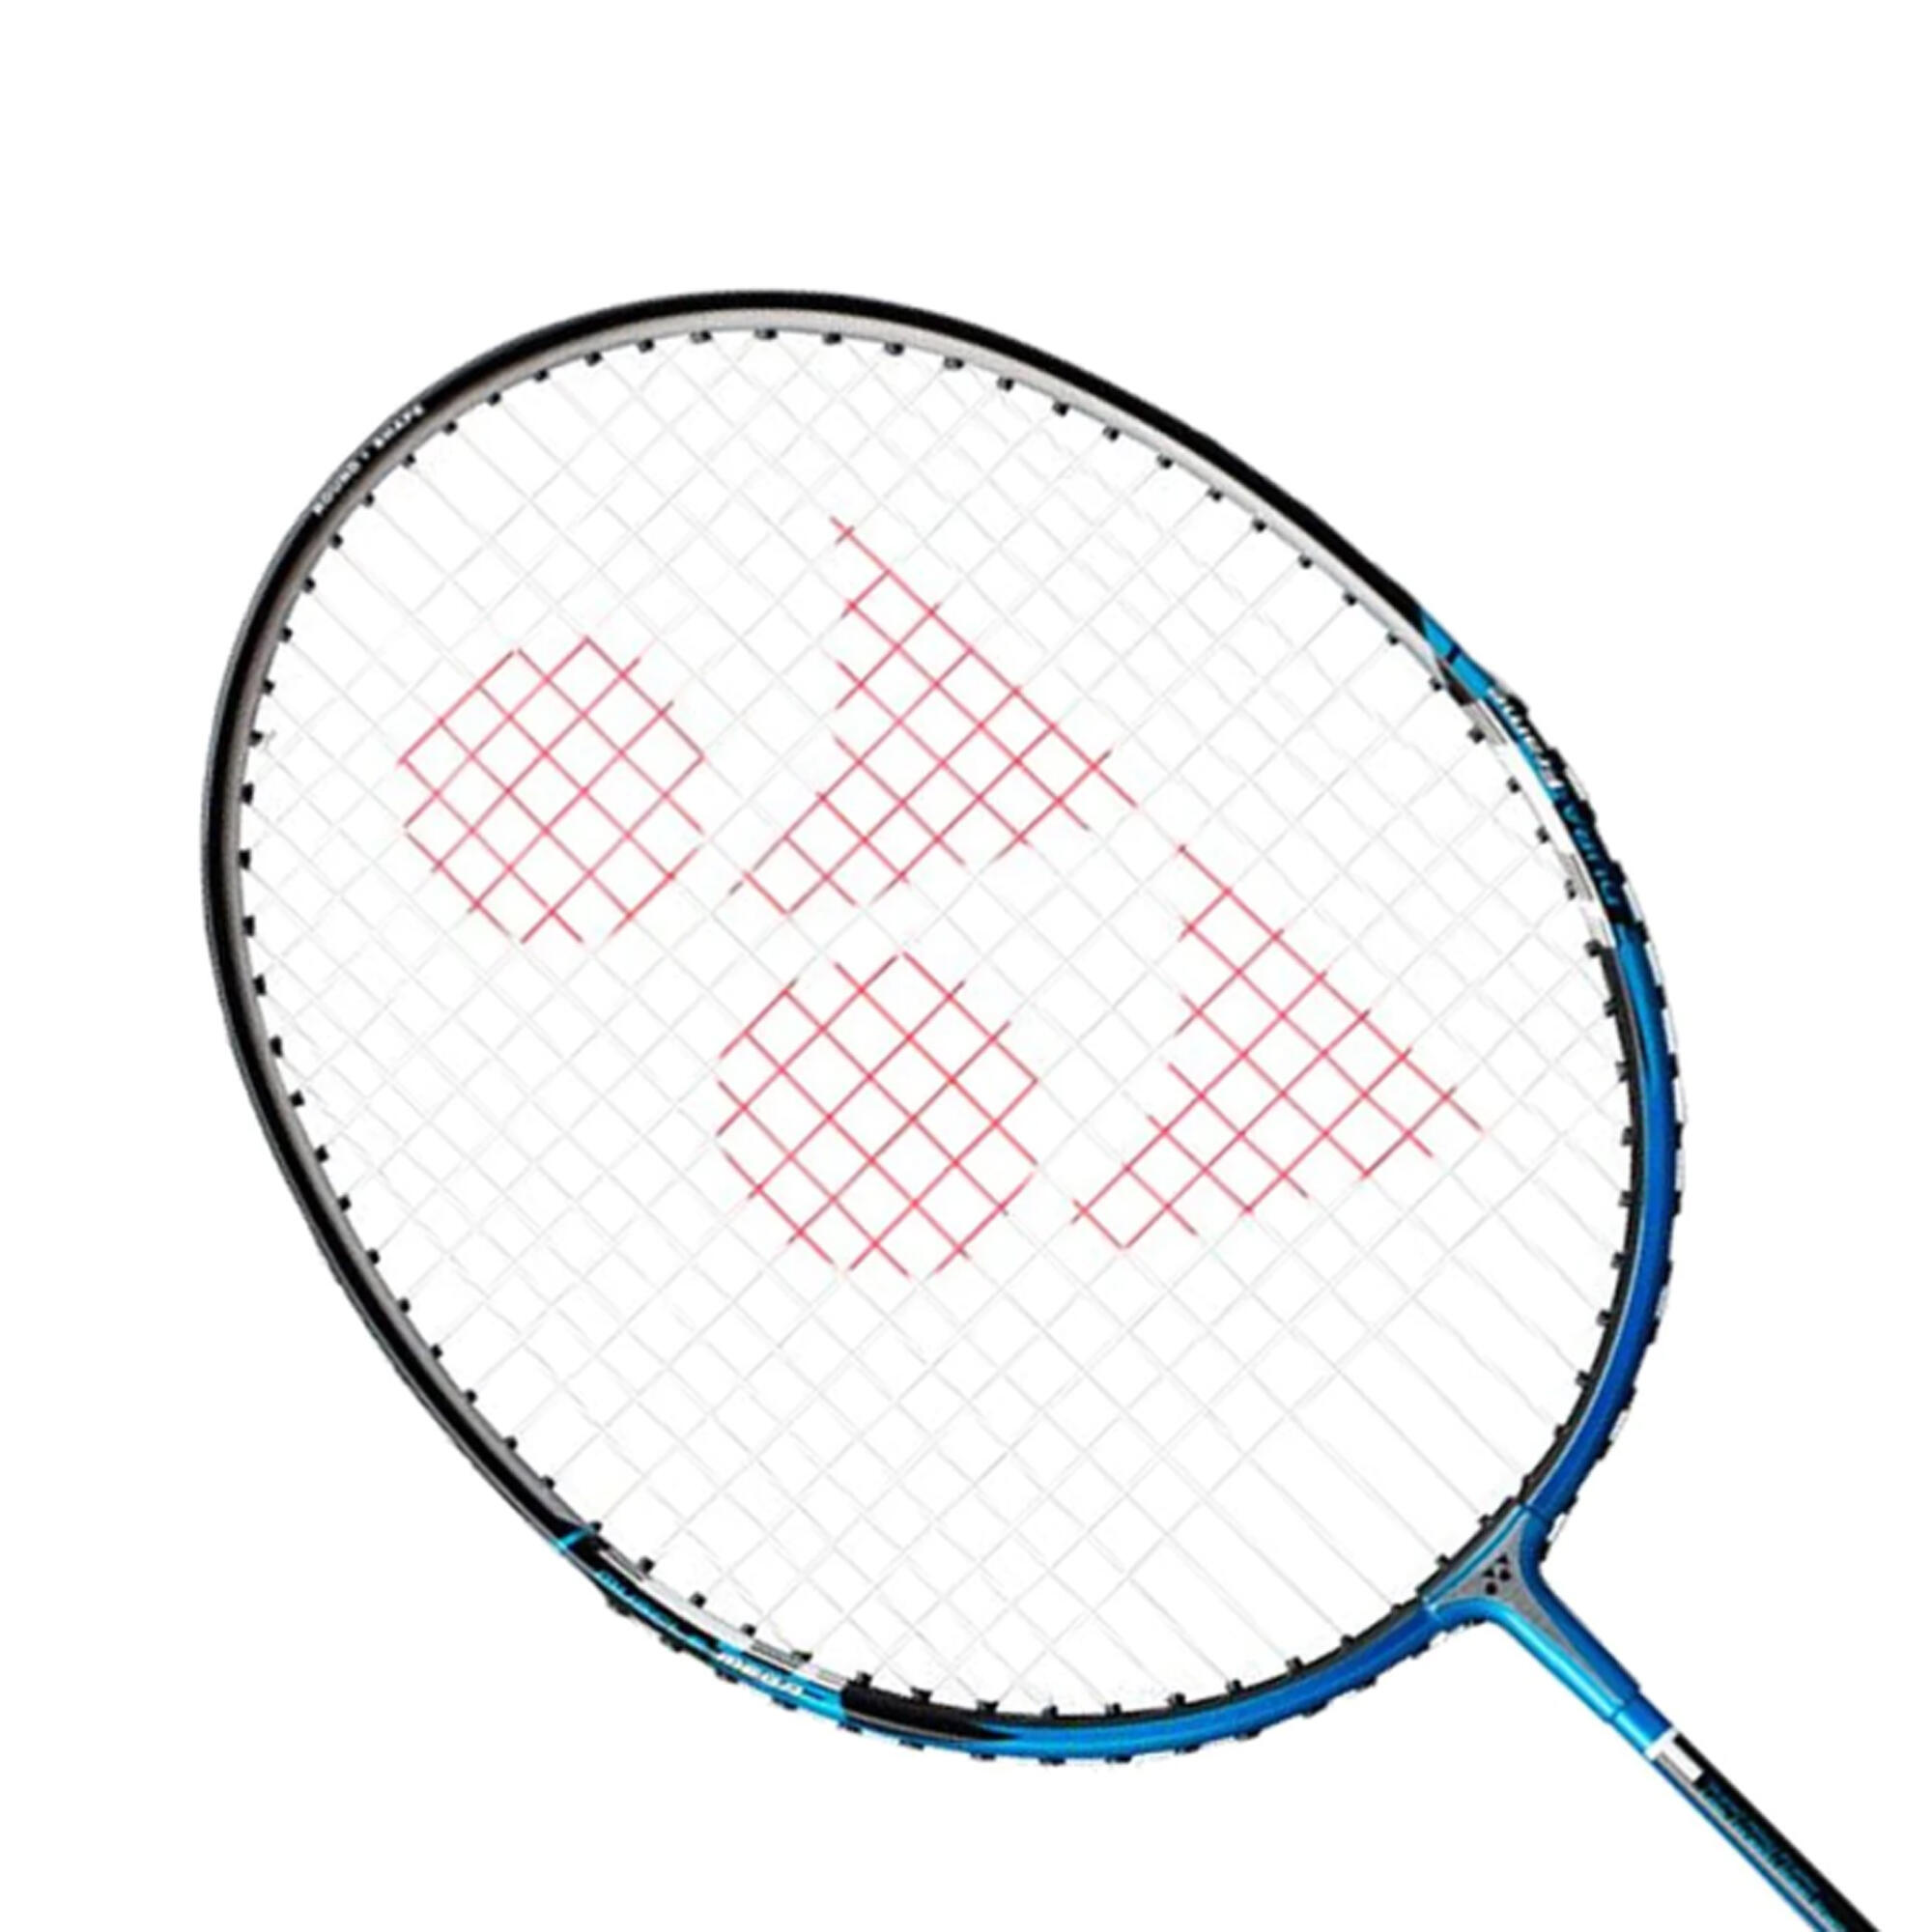 YONEX B7000 MDM Badminton Racket (White/Blue)